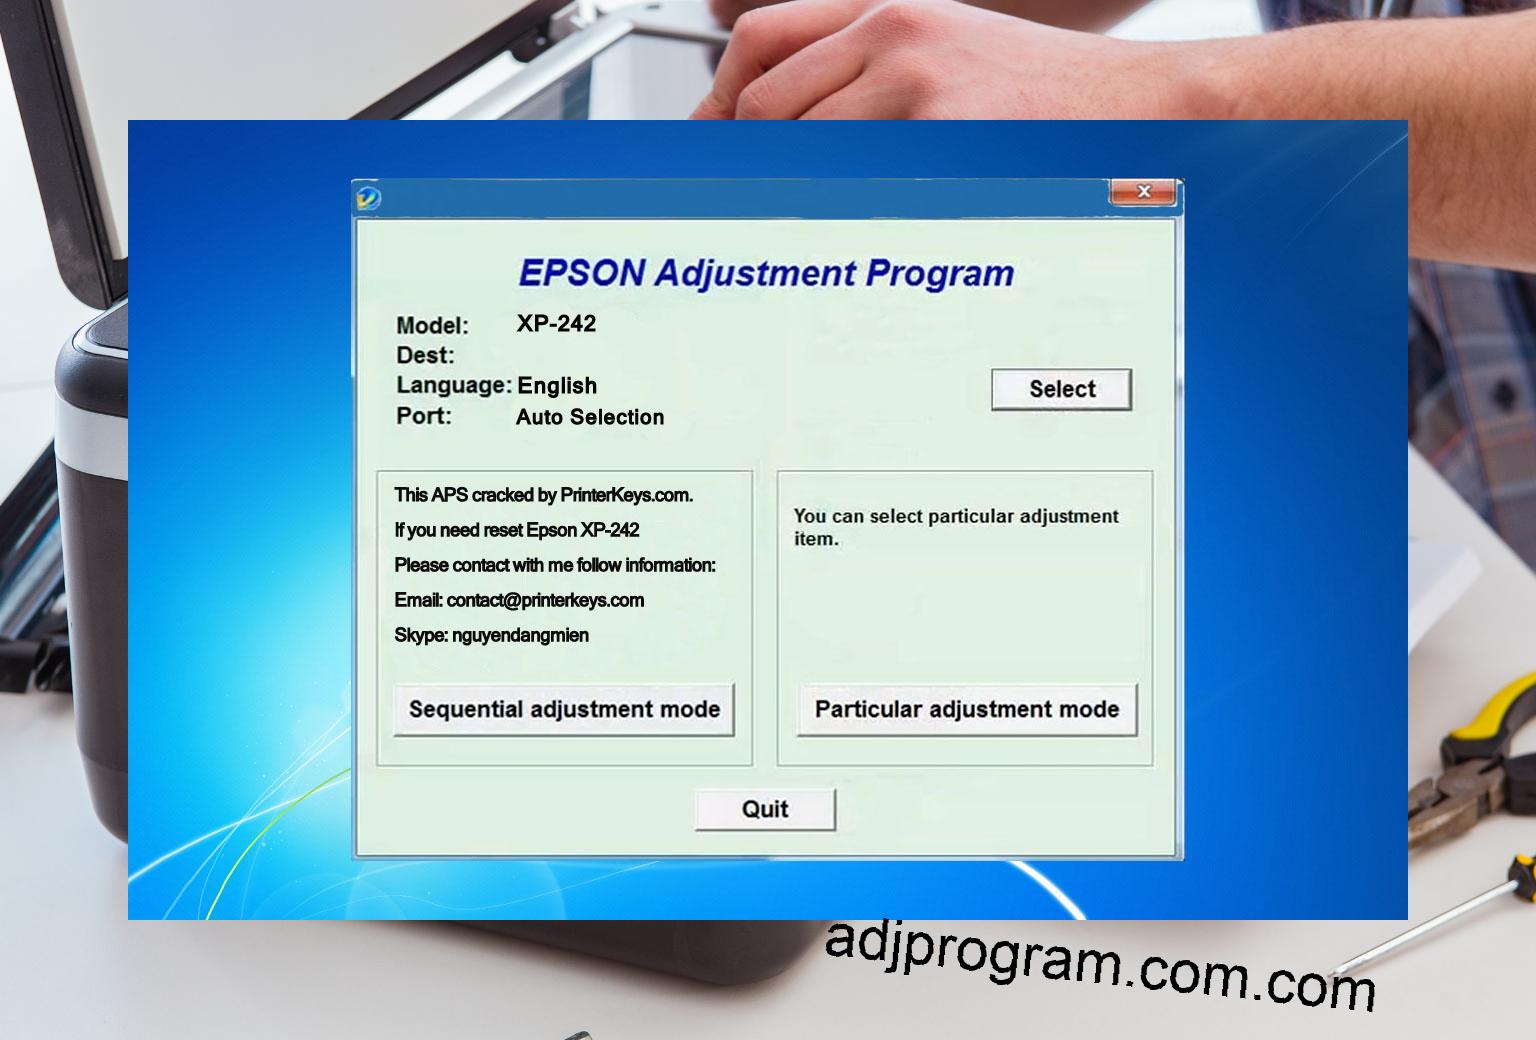 Epson XP-242 Adjustment Program